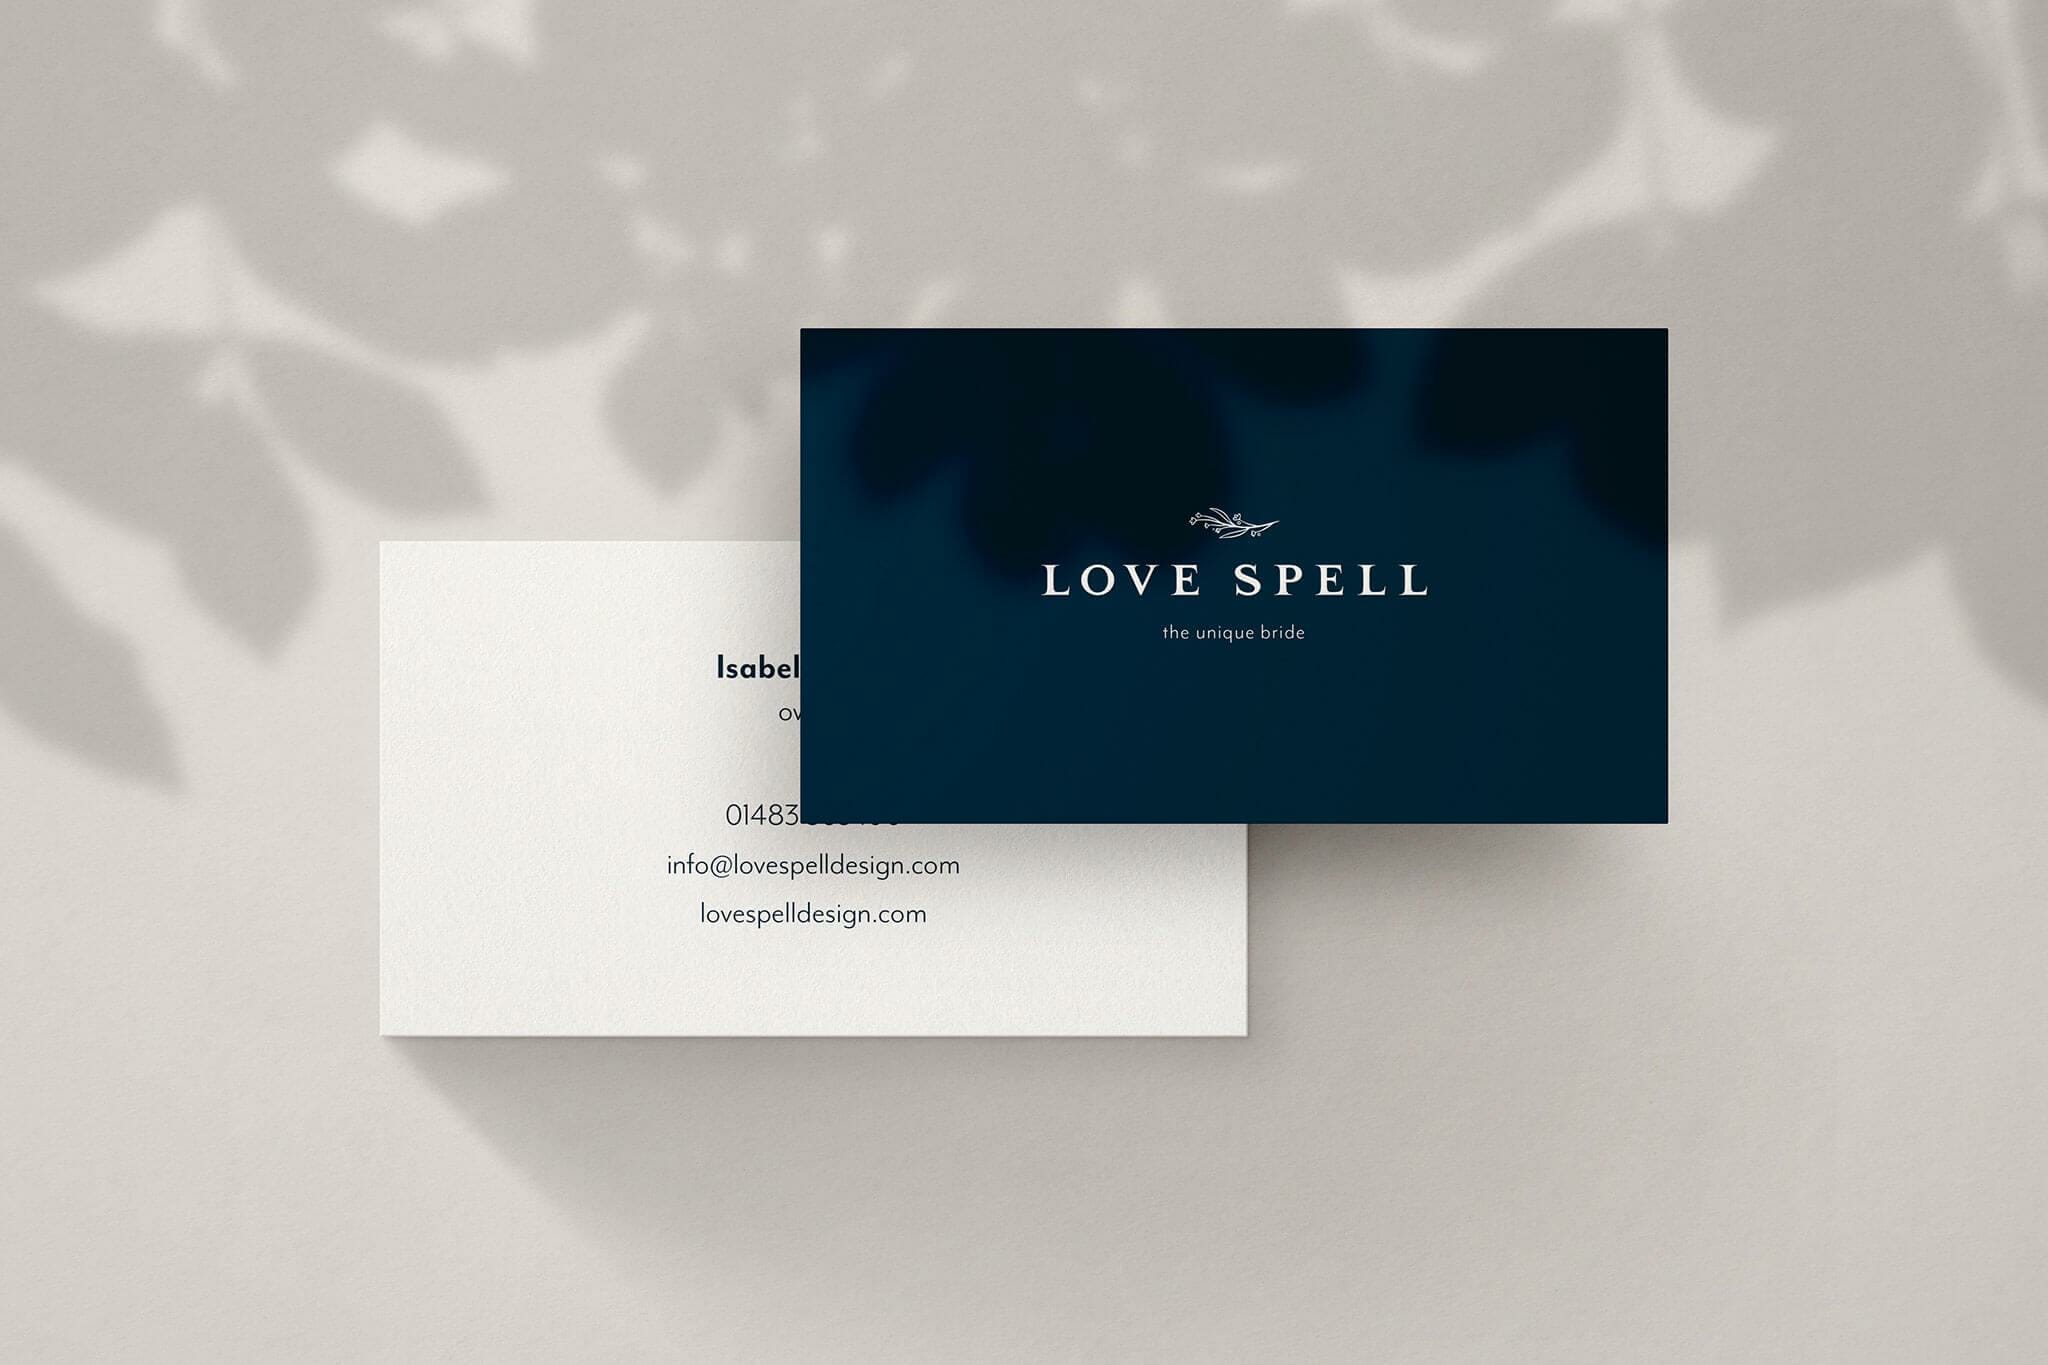 love-spell-design-branding-by-dazze